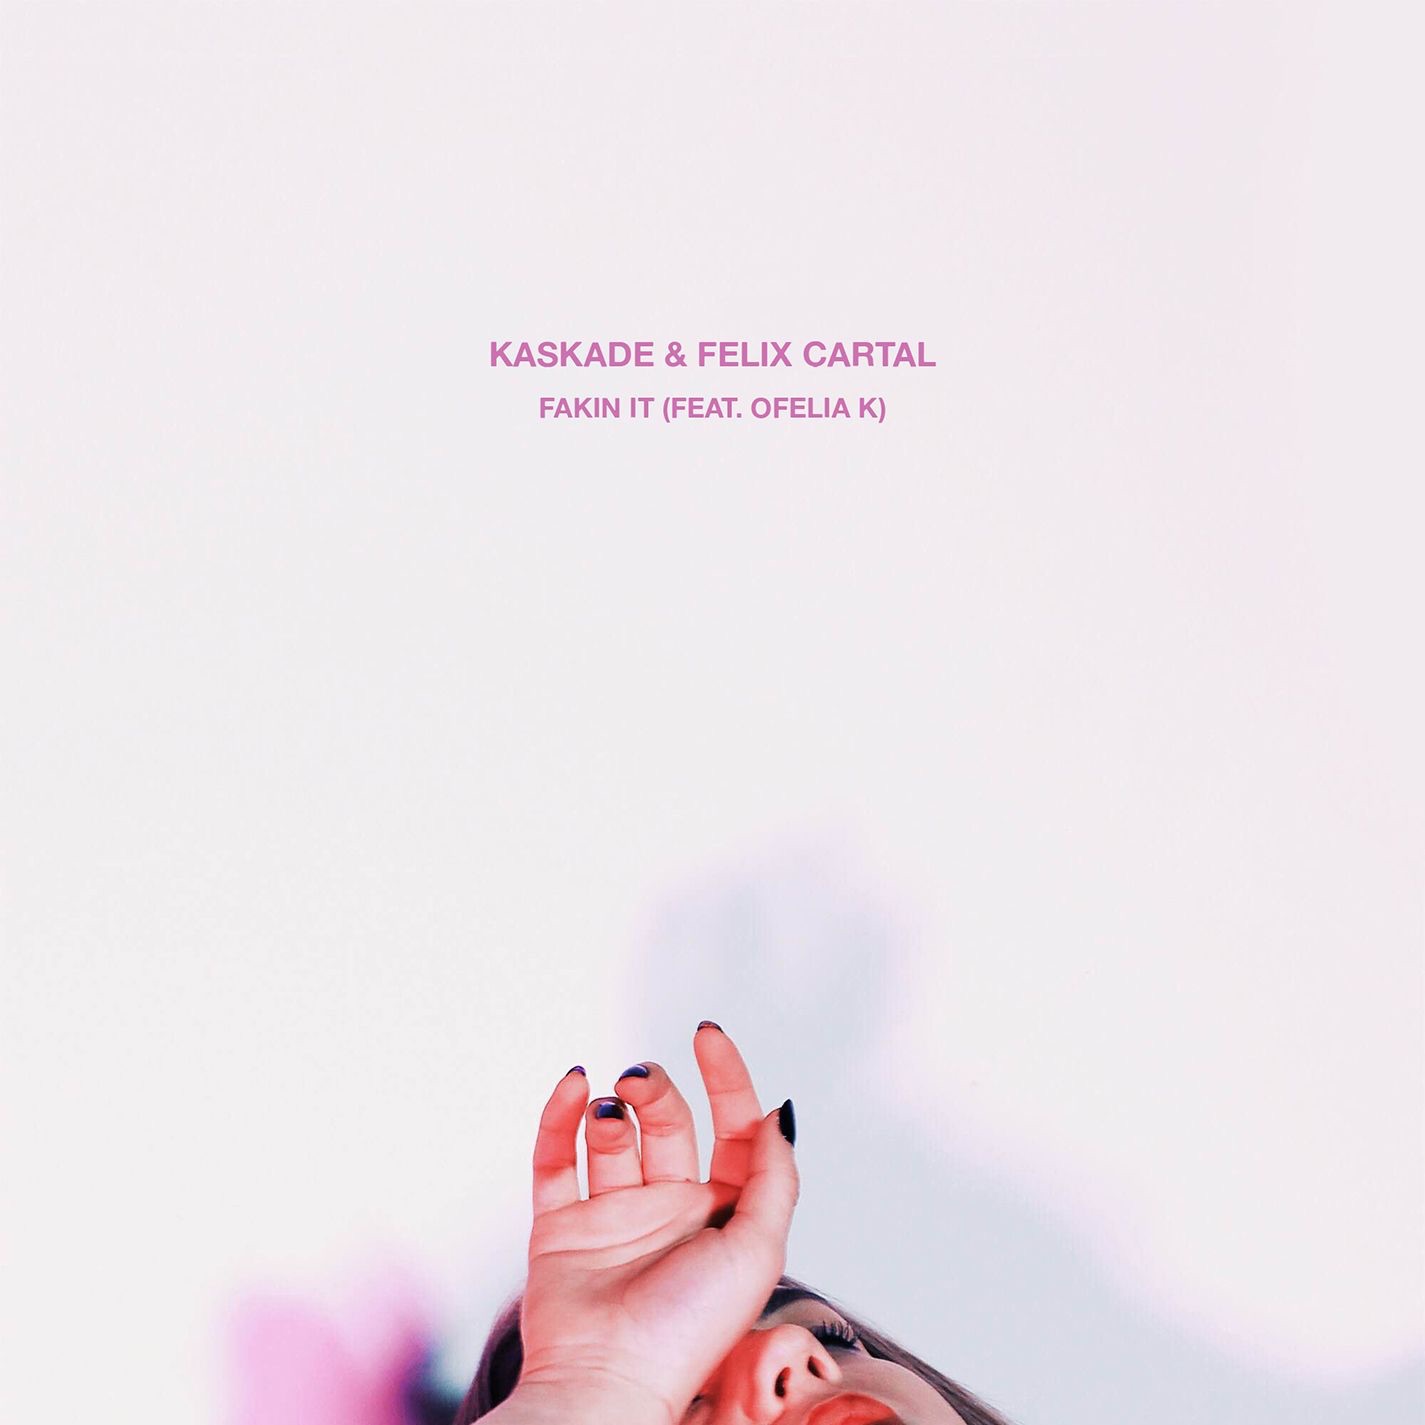 Kaskade & Felix Cartal featuring Ofelia K — Fakin It cover artwork